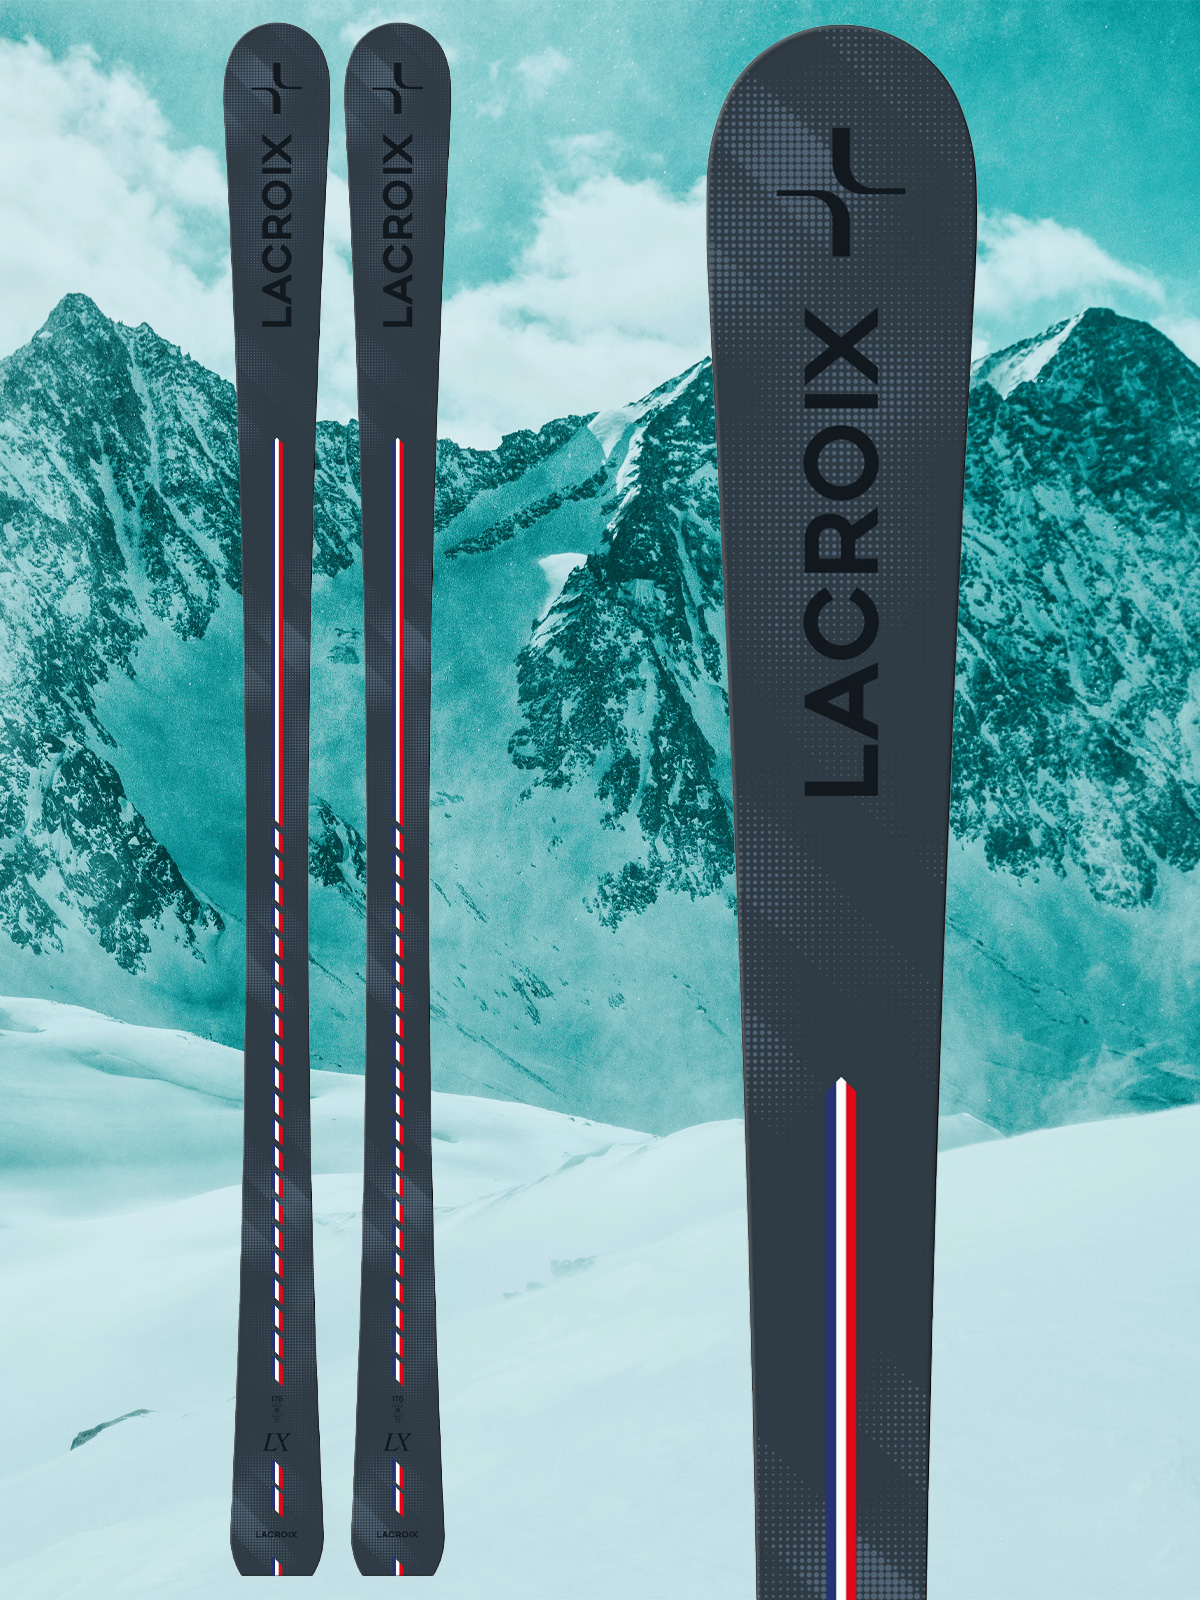 Žhavá novinka lyže Lacroix ve SKIMAX